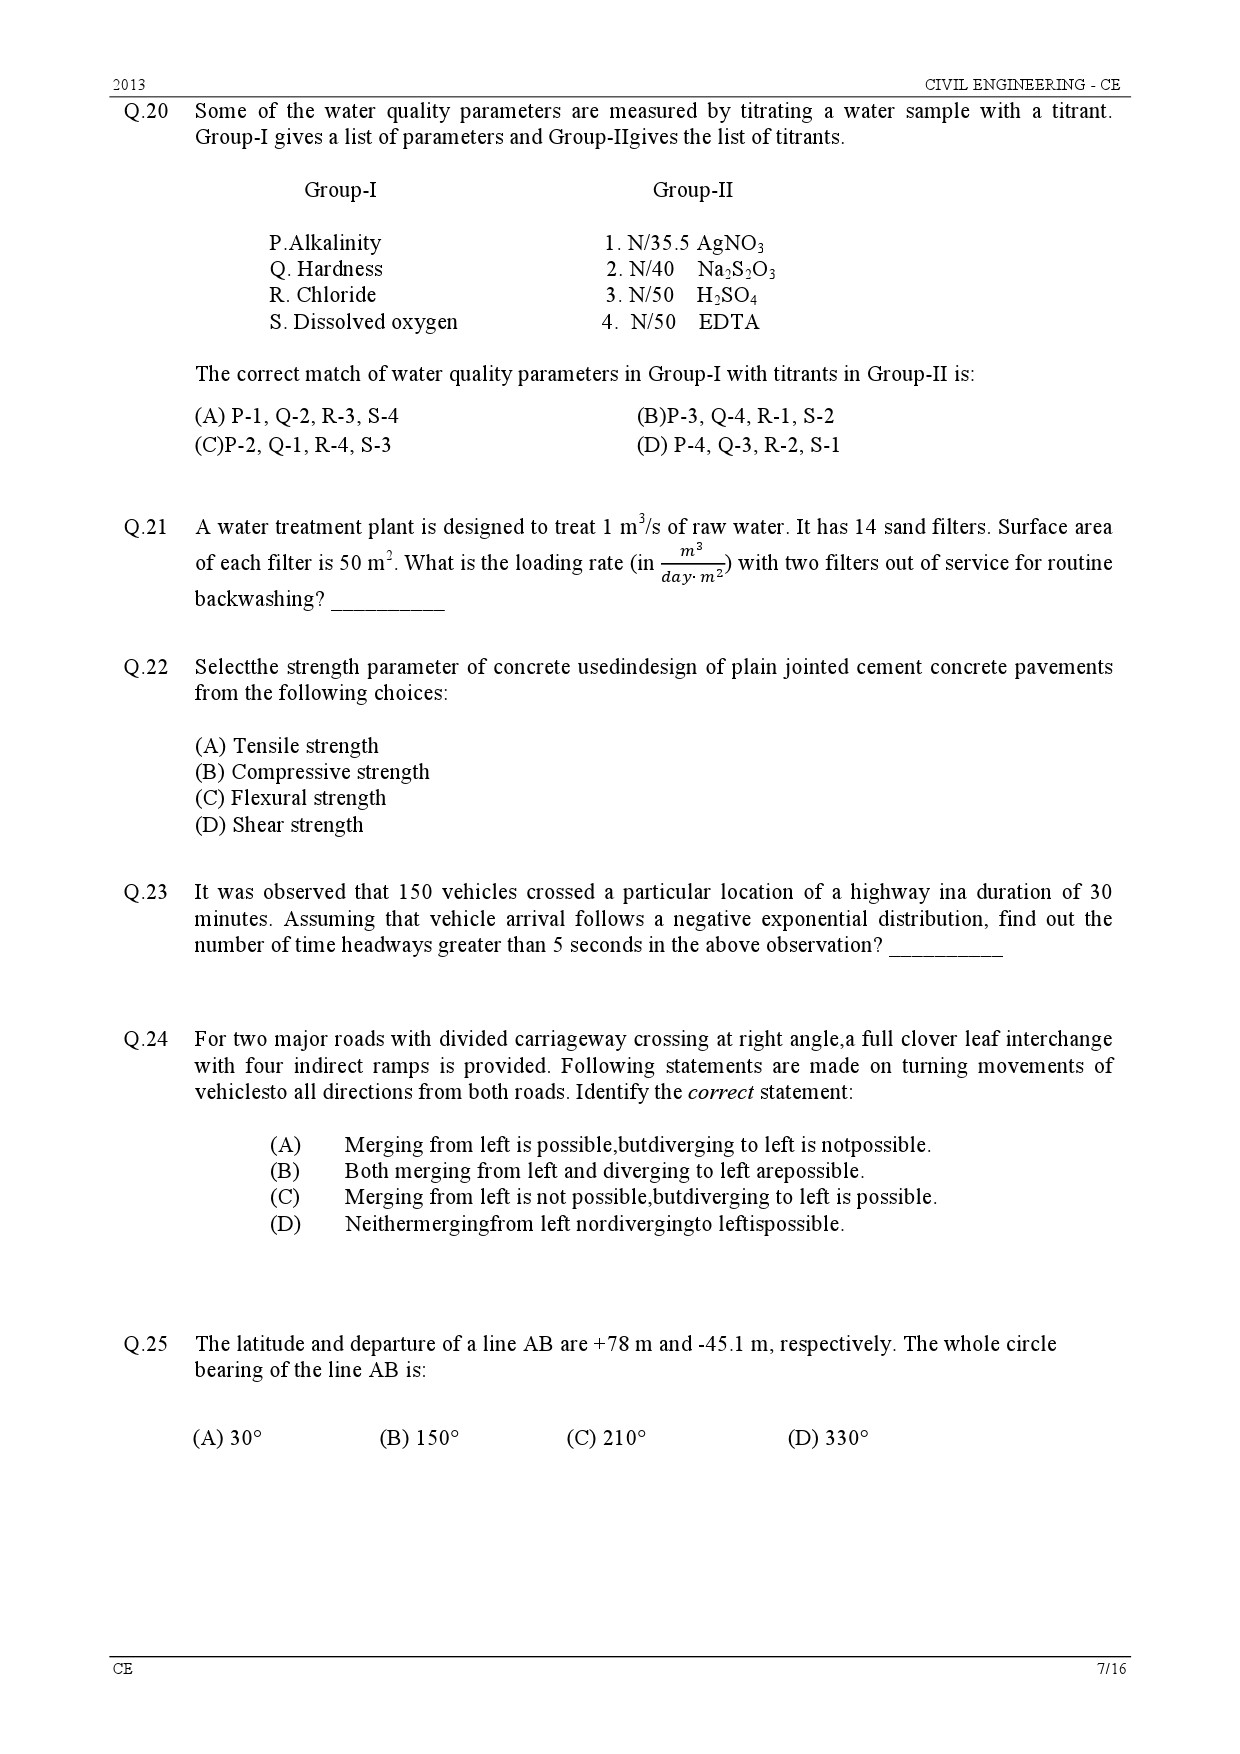 GATE Exam Question Paper 2013 Civil Engineering 7